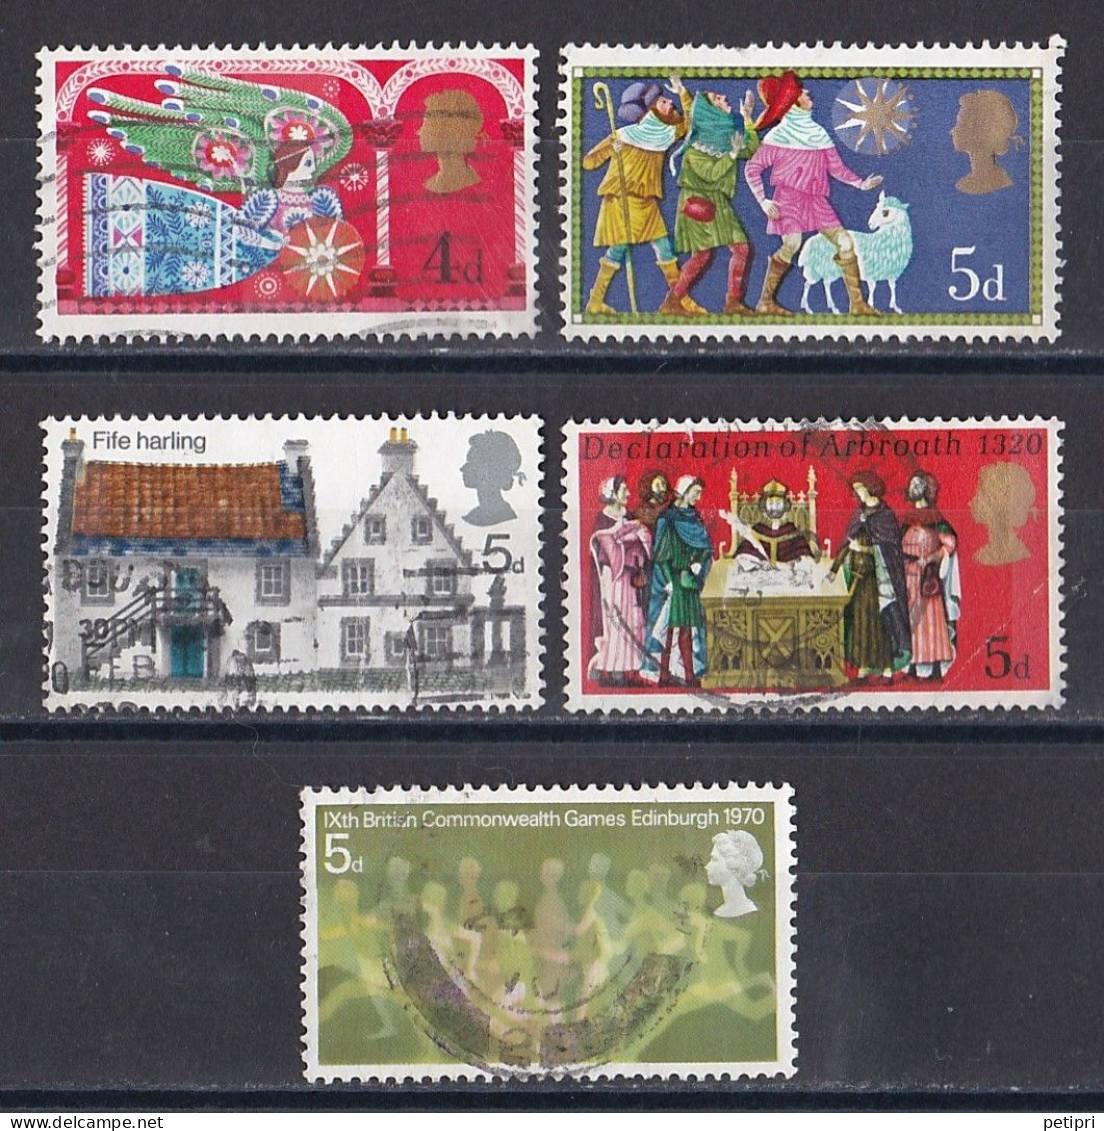 Grande Bretagne - 1952 - 1971 -  Elisabeth II -  Y&T N °  579   580   582   586   596   Oblitérés - Used Stamps